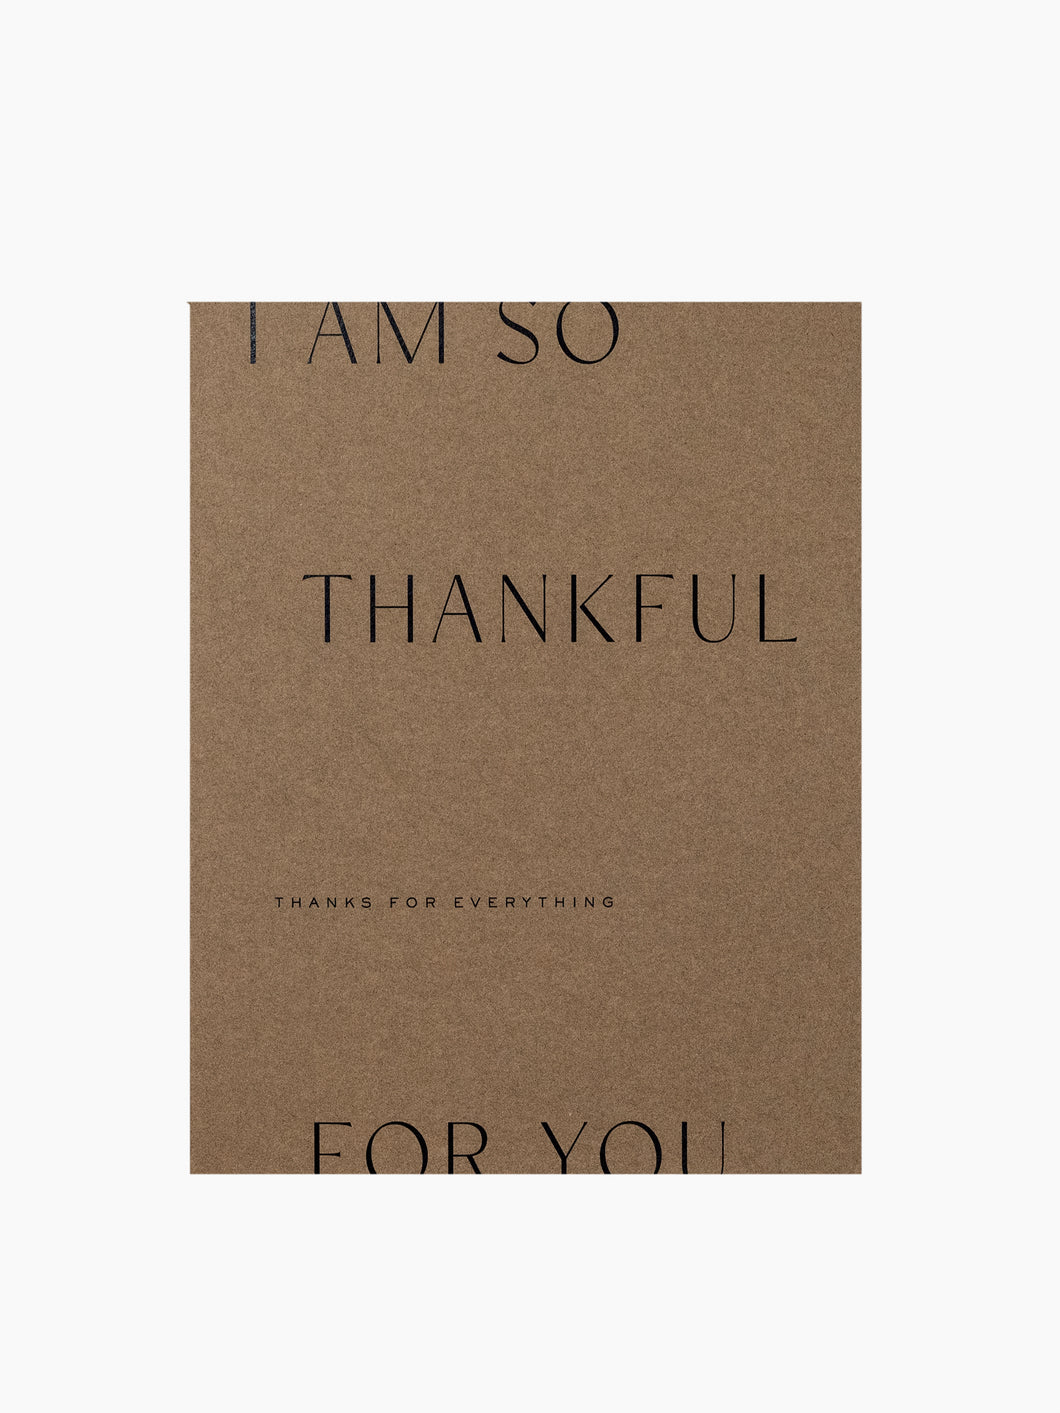 Thankful Card